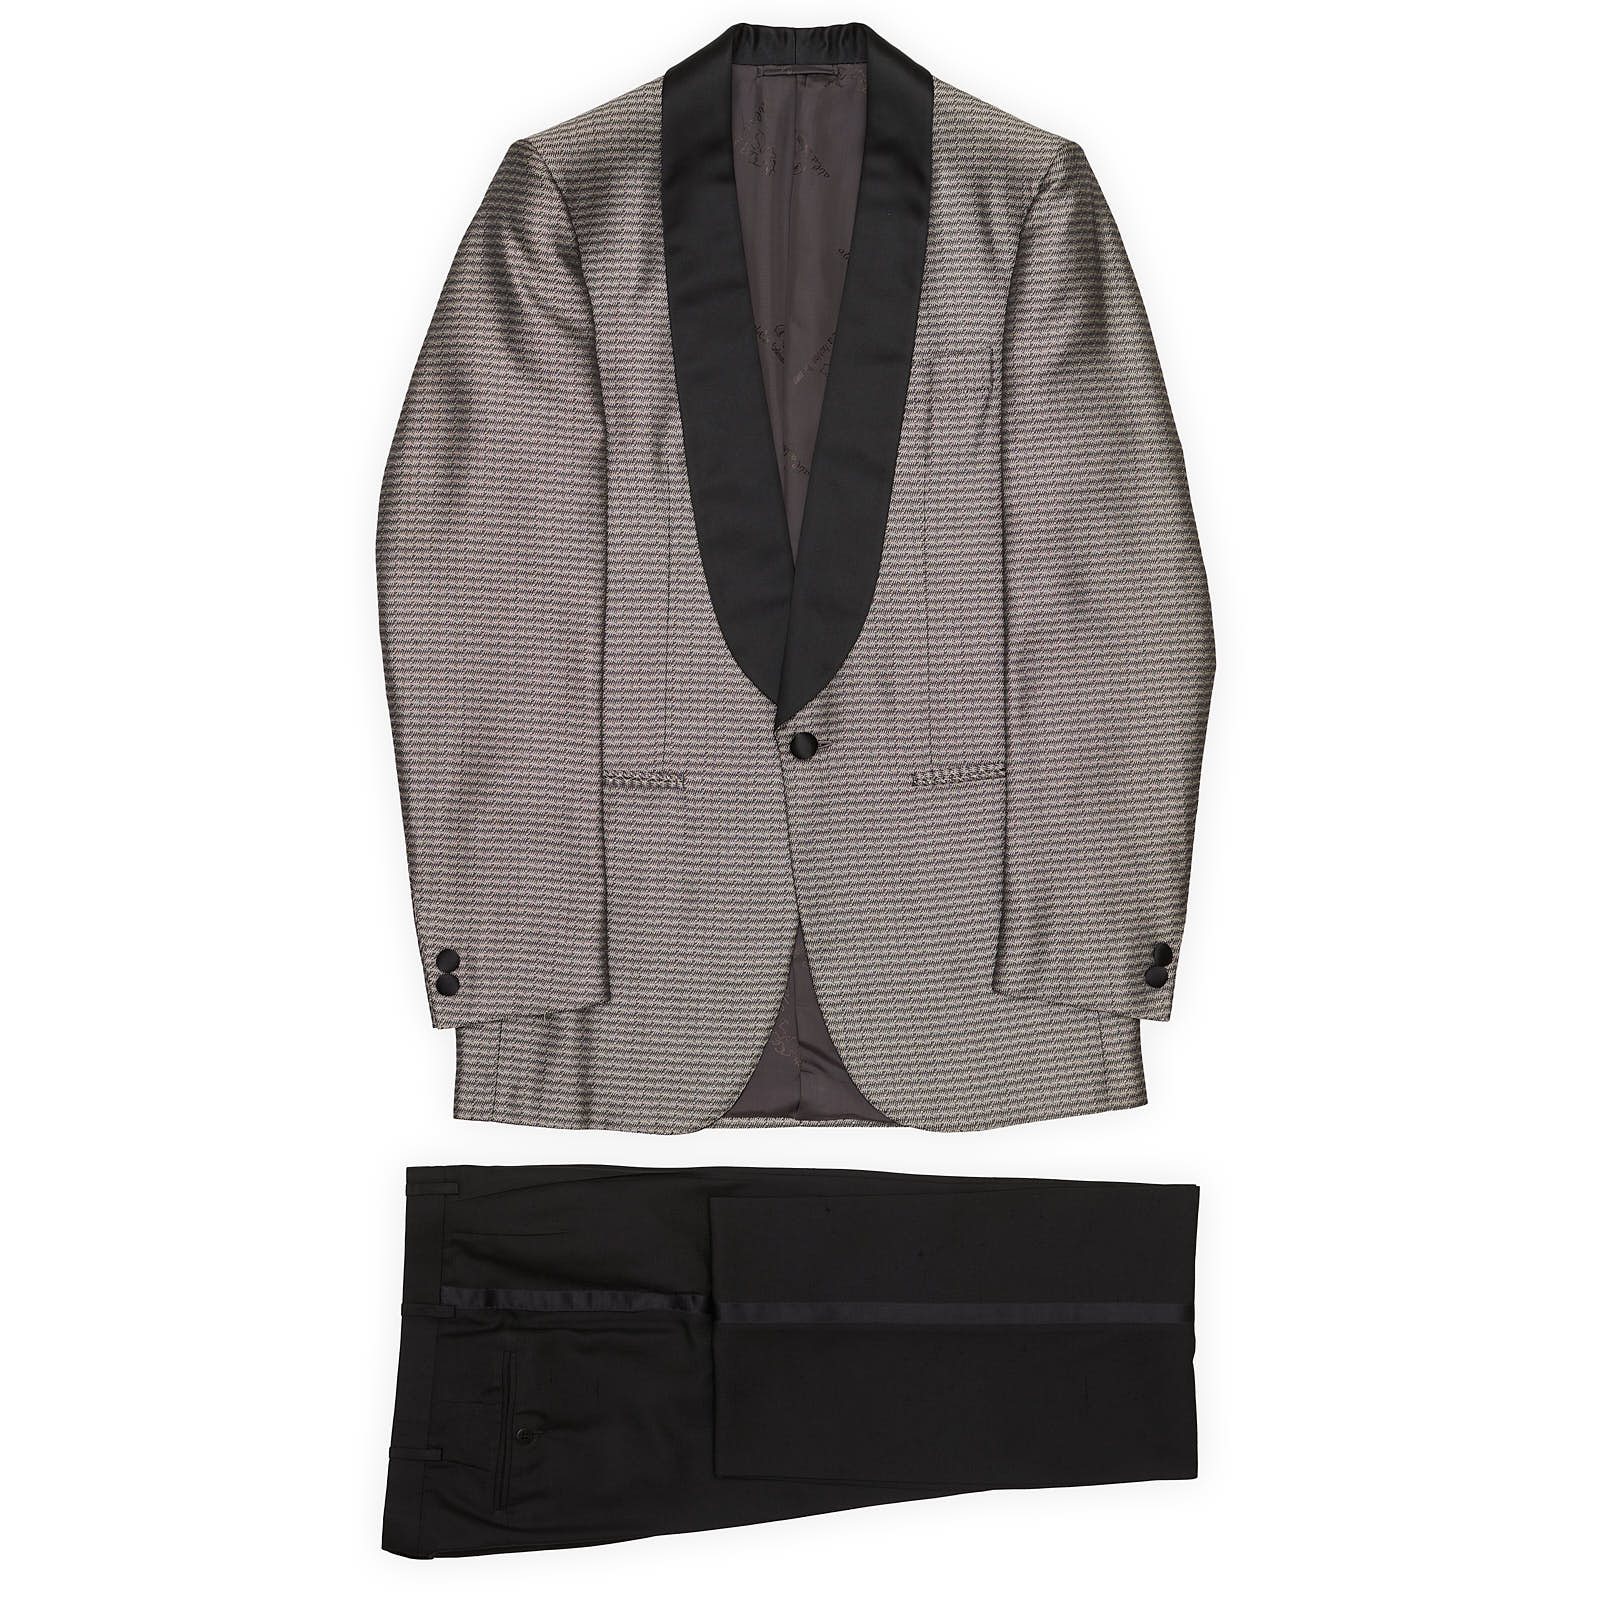 ABLA by Angelo Blasi Black-Gray Handmade Silk Tuxedo Suit Suit EU 44 NEW US 34